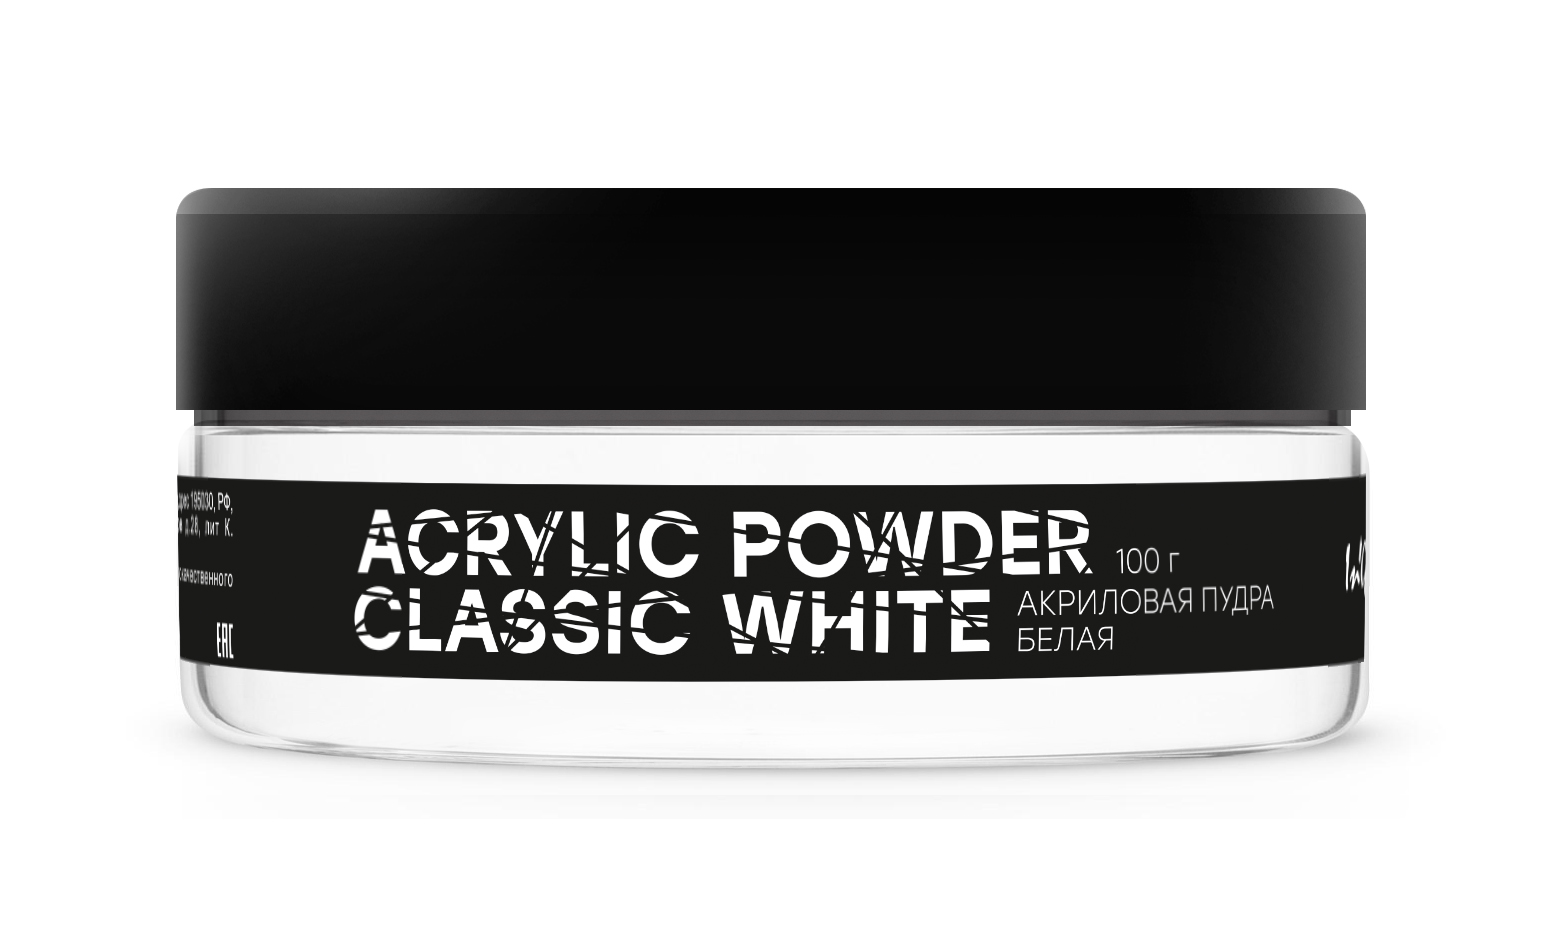 Акриловая пудра белая Acrylic Powder Classic White, 100 г акриловая пудра ingarden acrylic powder classic white pearl белая с мерцанием 400 г